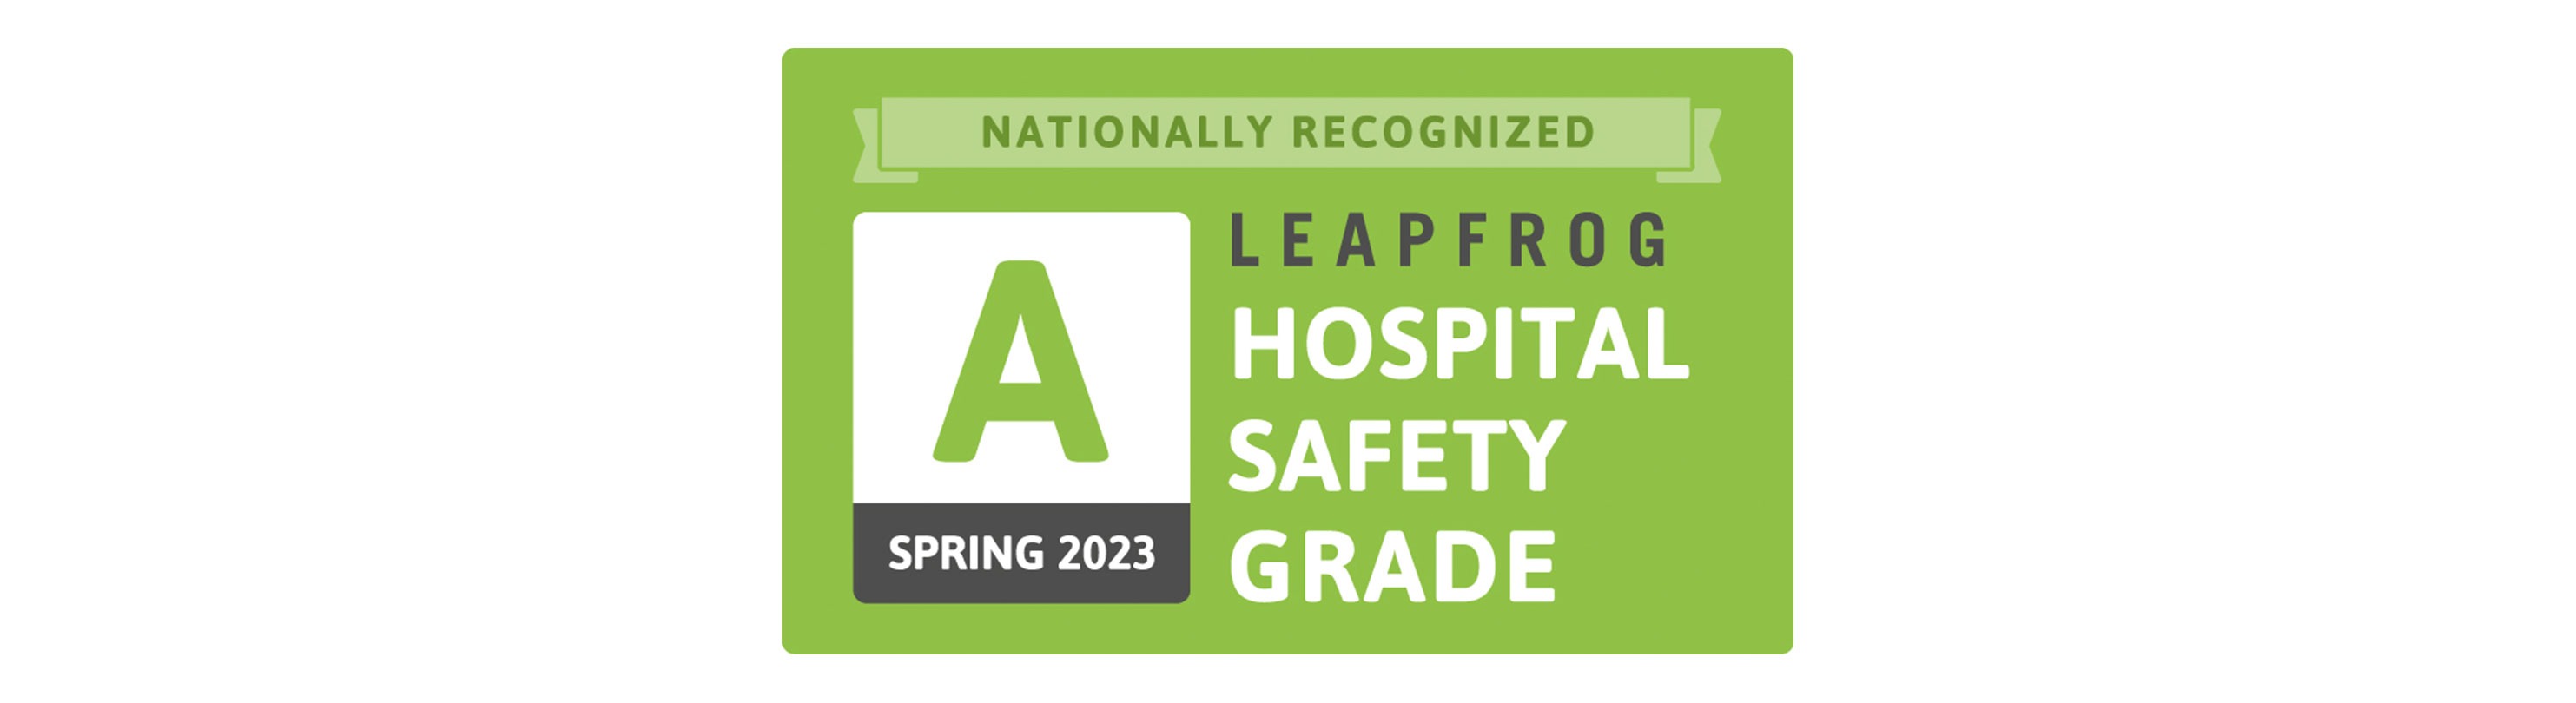 Backus Hospital Awarded Spring 2023 ‘A’ Hospital Safety Grade From Leapfrog Group